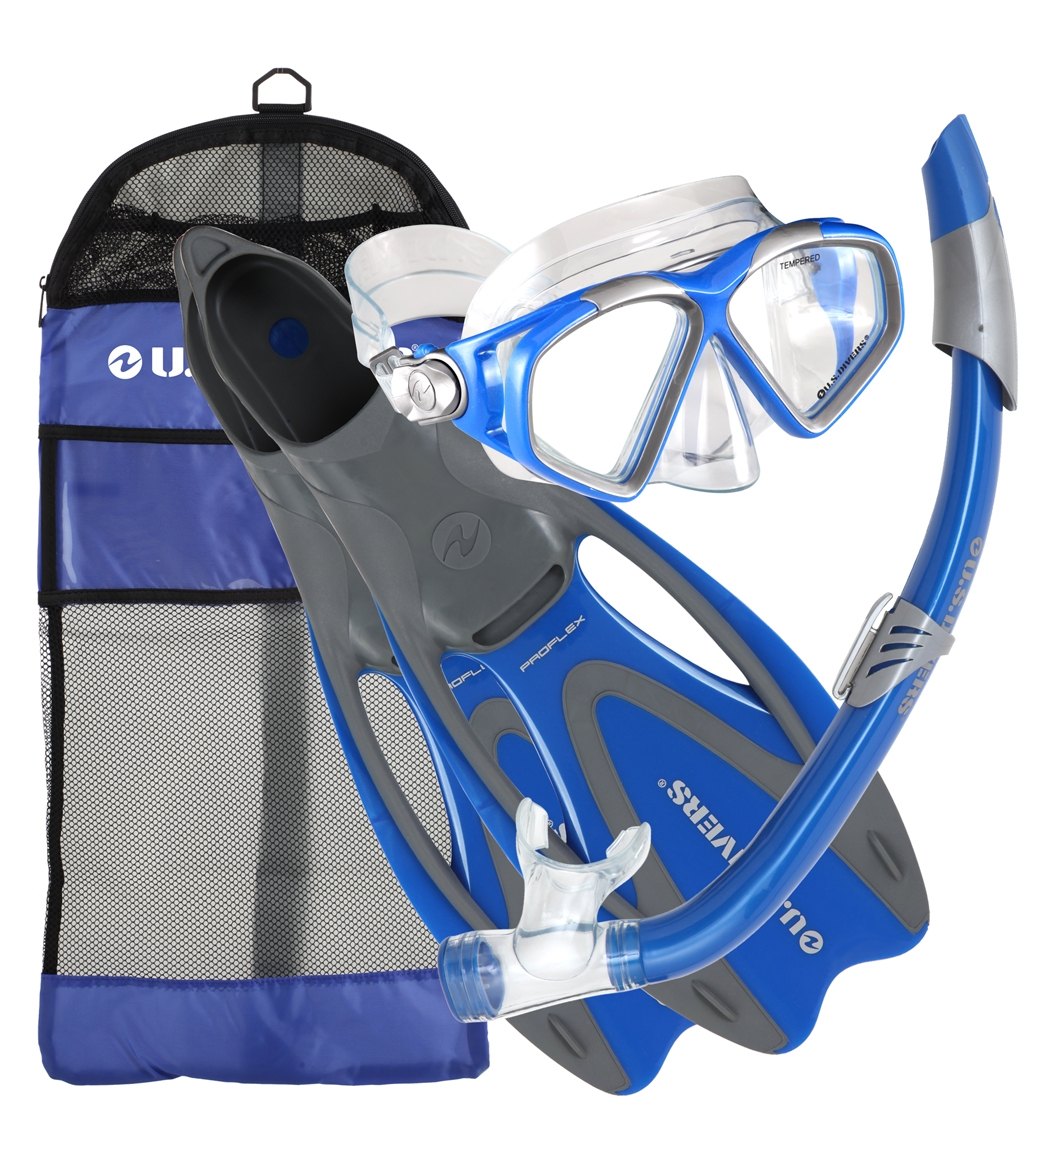 U.s. Divers Cozumel Mask / Seabreeze Snorkel Proflex Fins Gear Bag Set - Blue Small Plastic/Rubber/Silicone - Swimoutlet.com